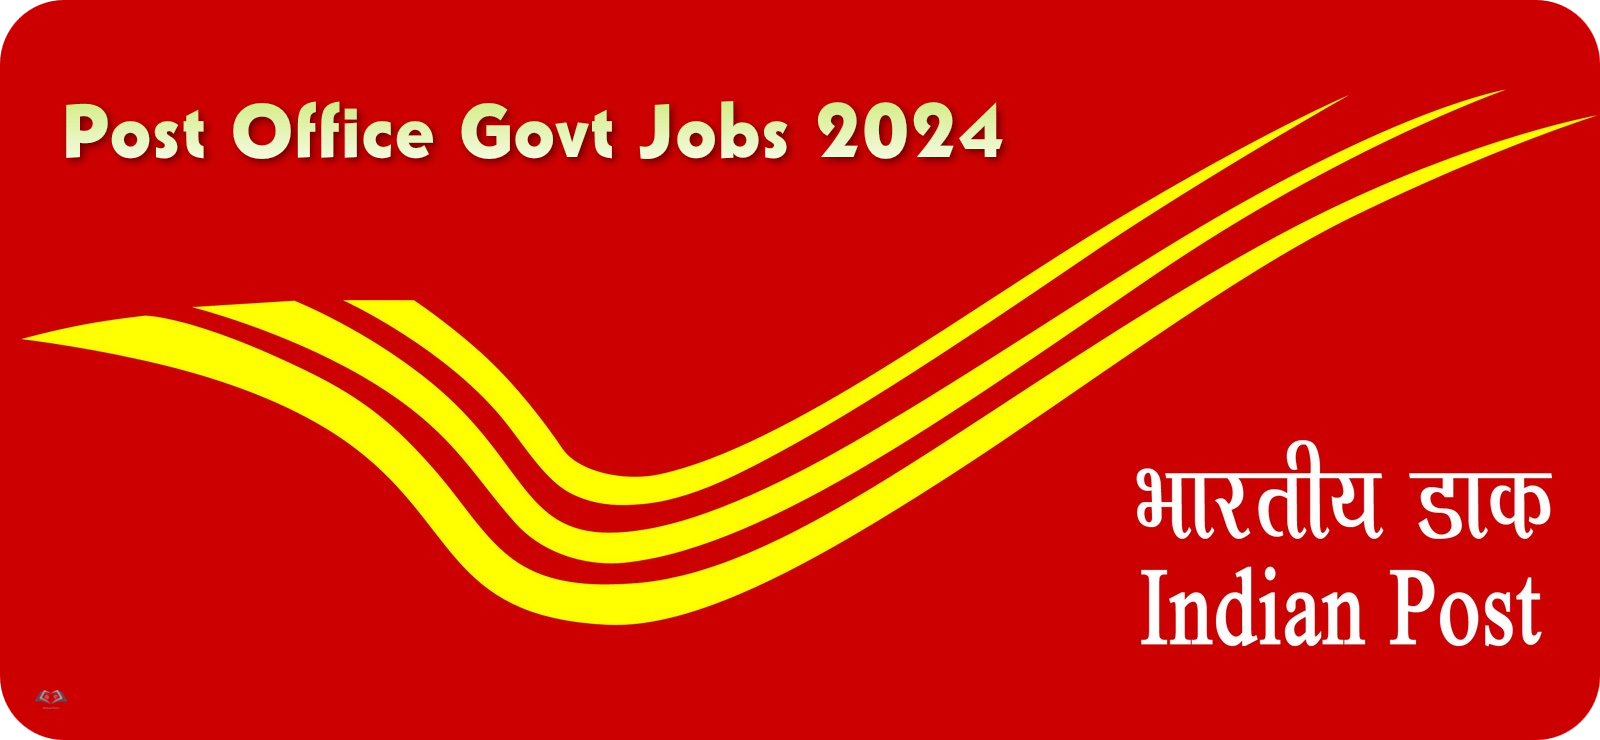 Post Office Govt Jobs 2024